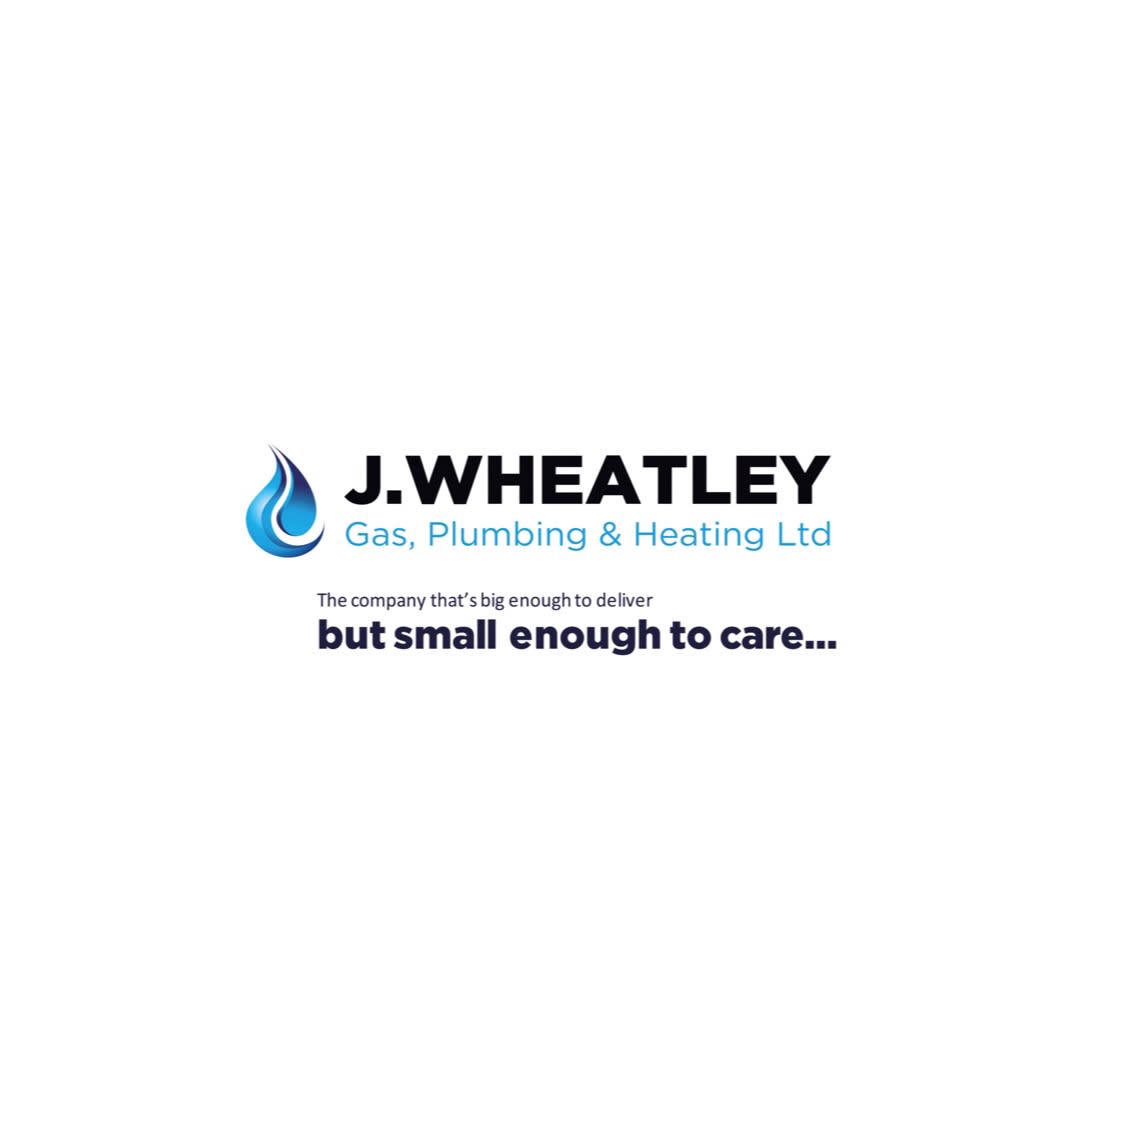 Images John Wheatley Gas Plumbing & Heating Ltd